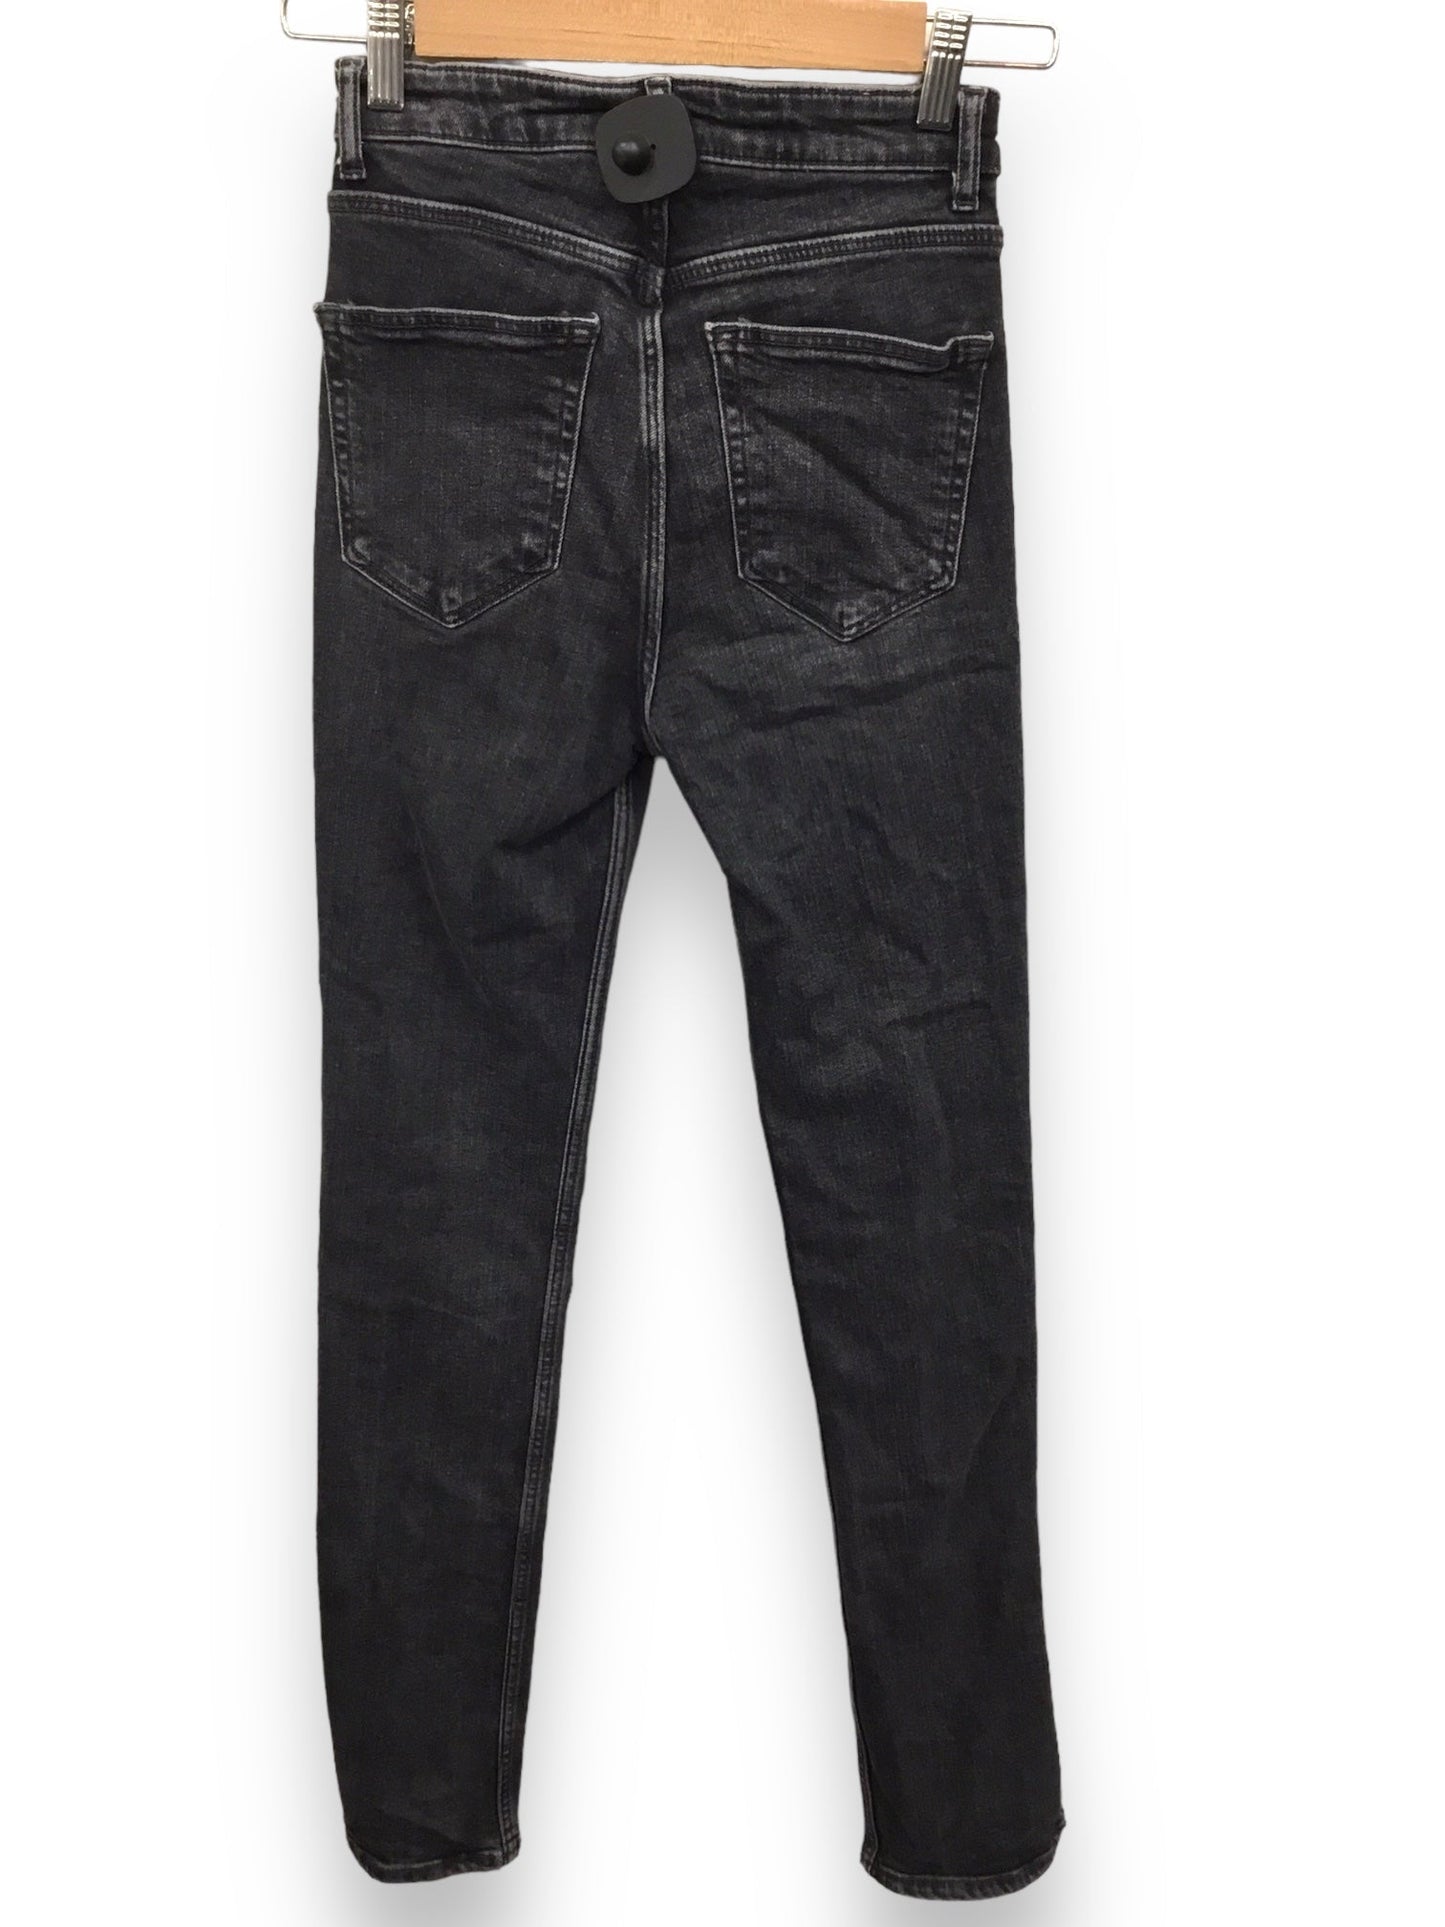 Jeans Boot Cut By Zara  Size: 2